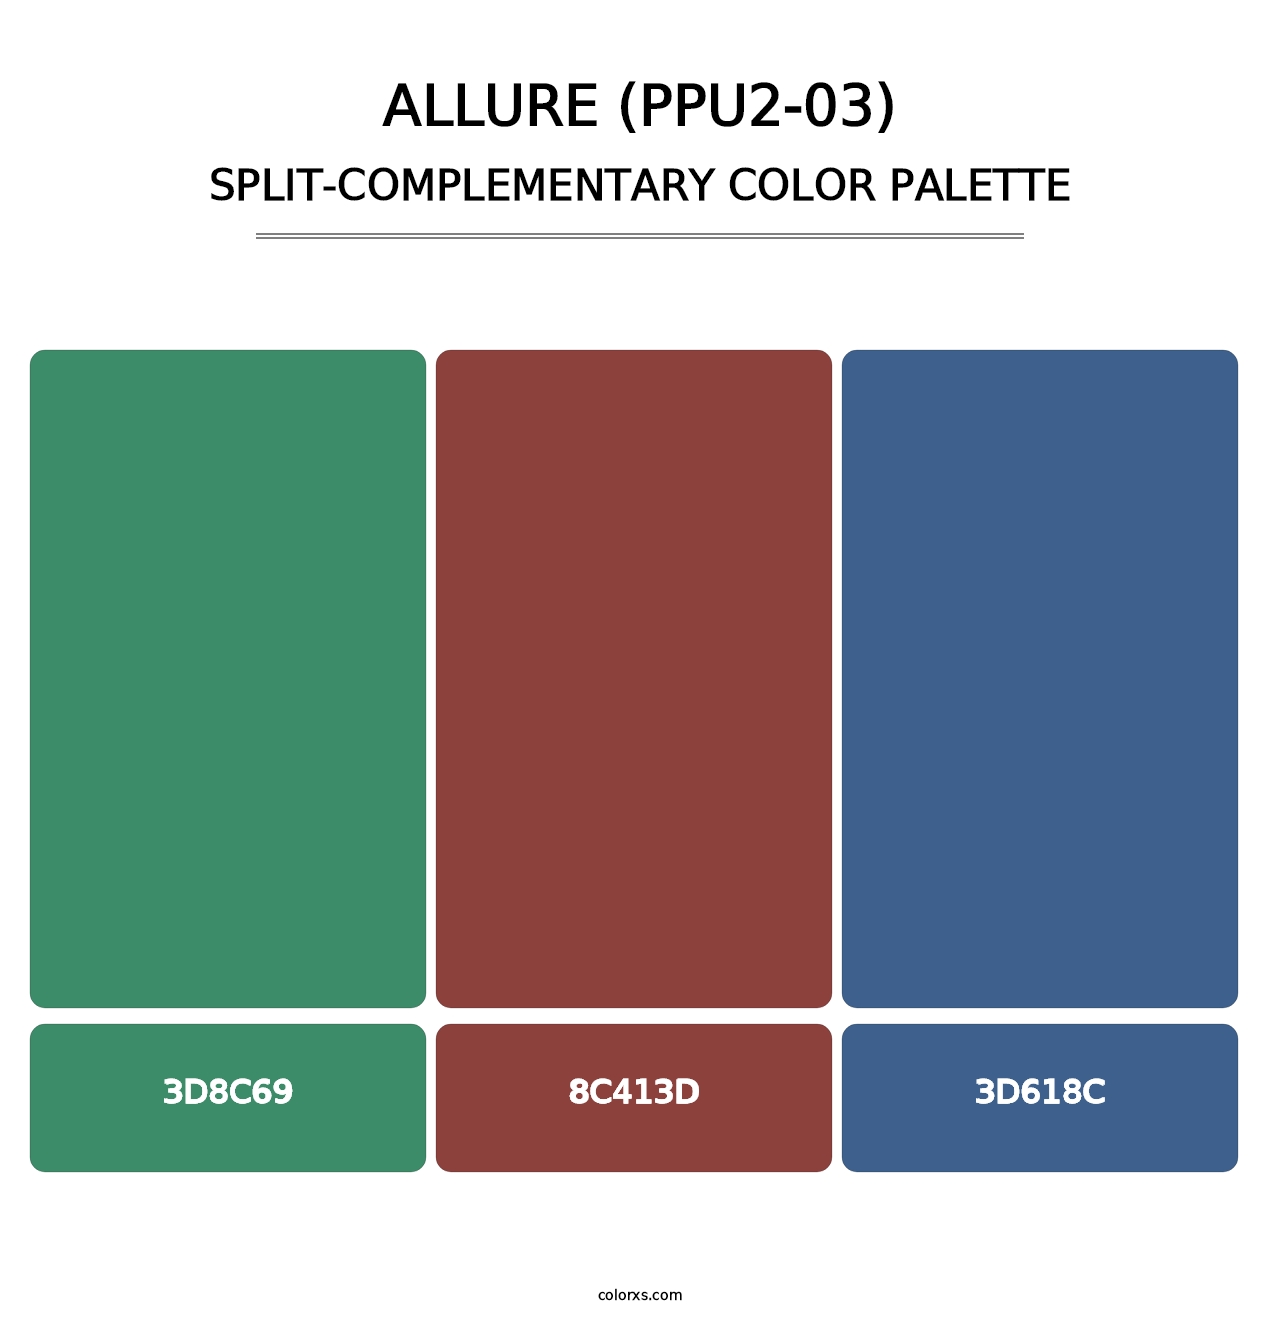 Allure (PPU2-03) - Split-Complementary Color Palette